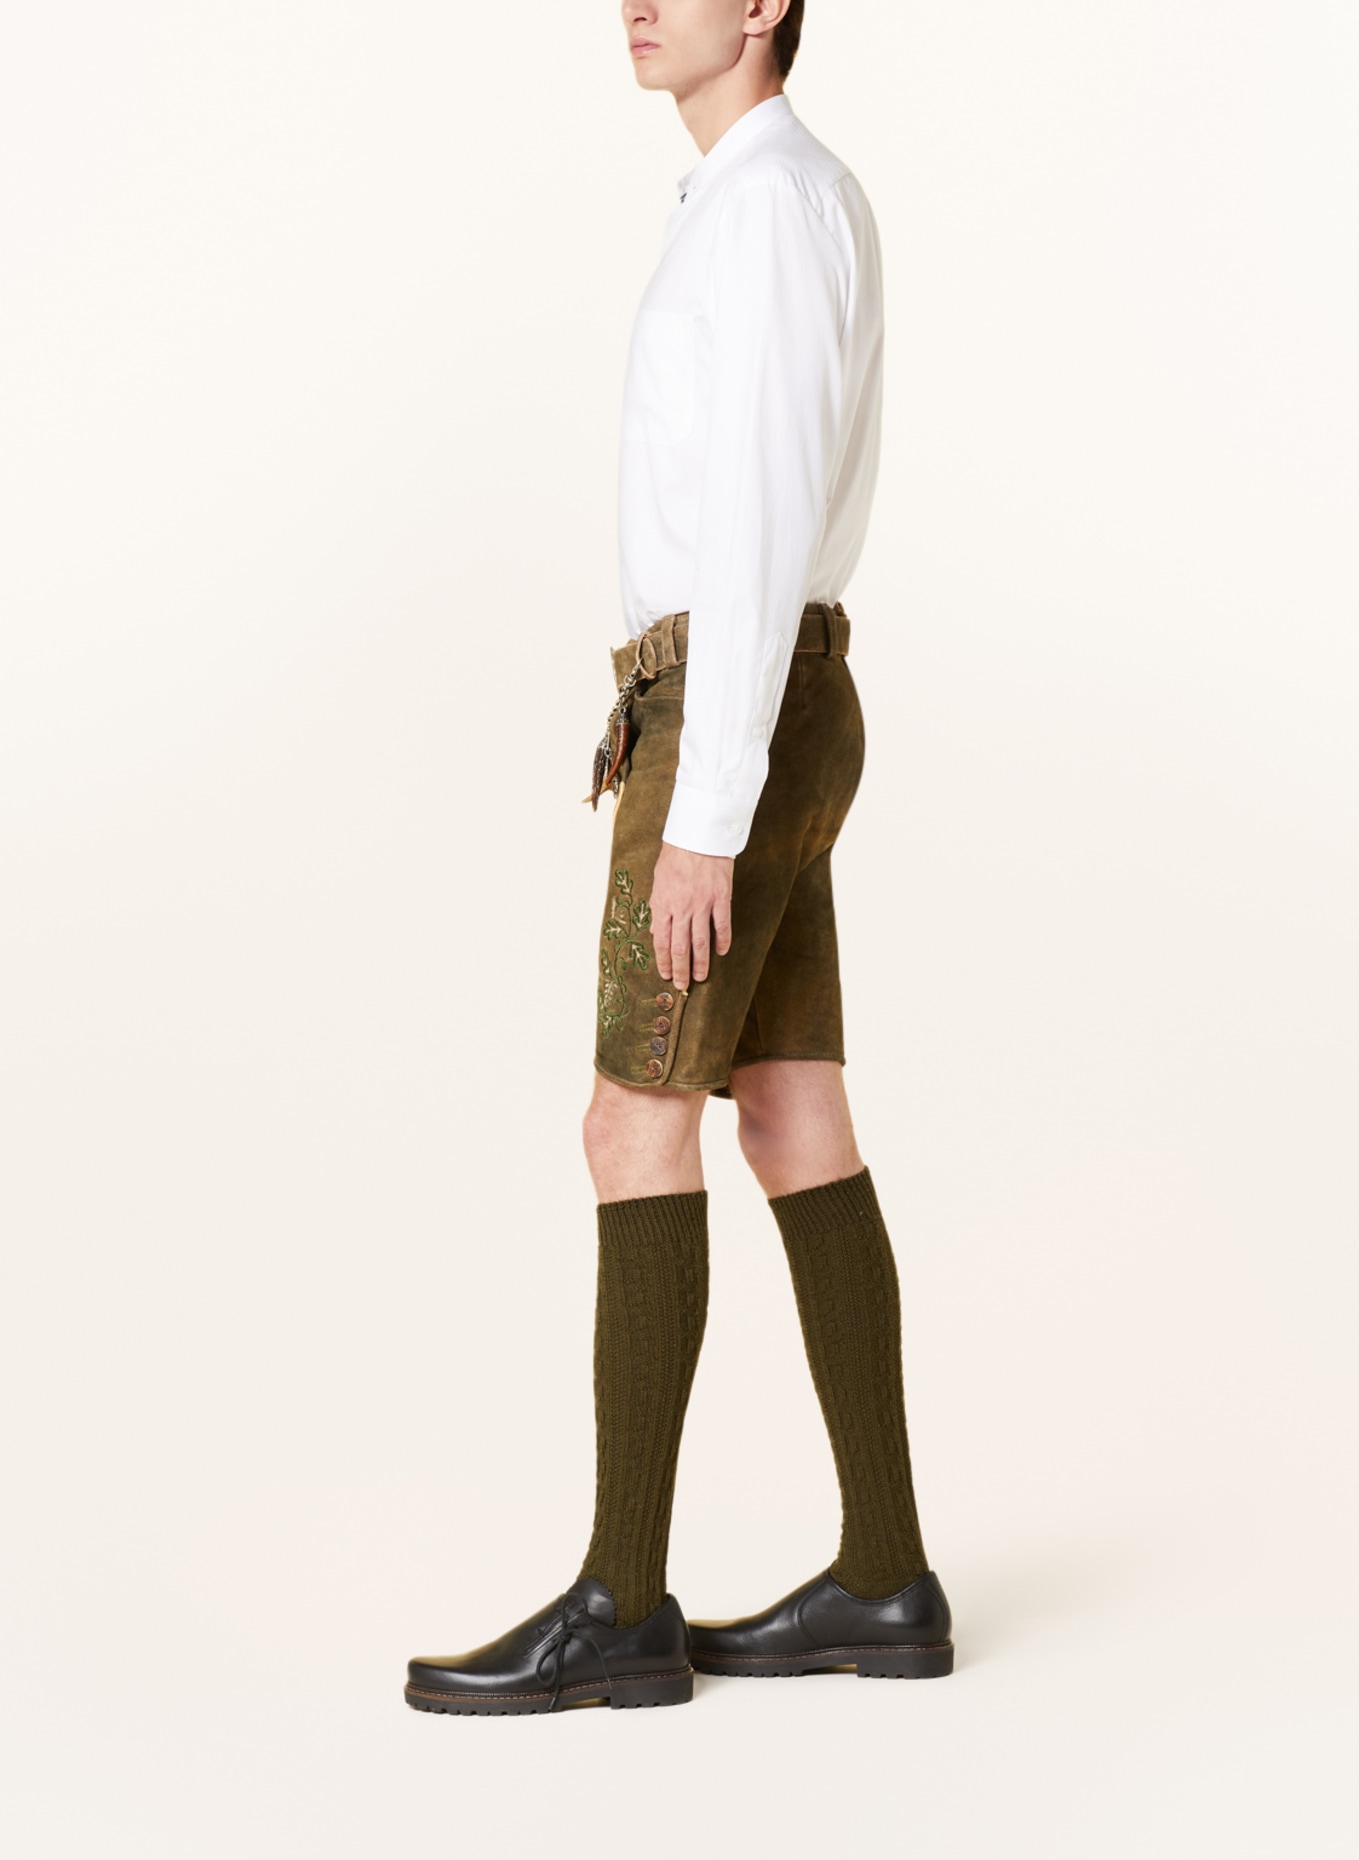 HIRSCHER Trachten lederhosen LENGGRIES, Color: DARK BROWN (Image 4)